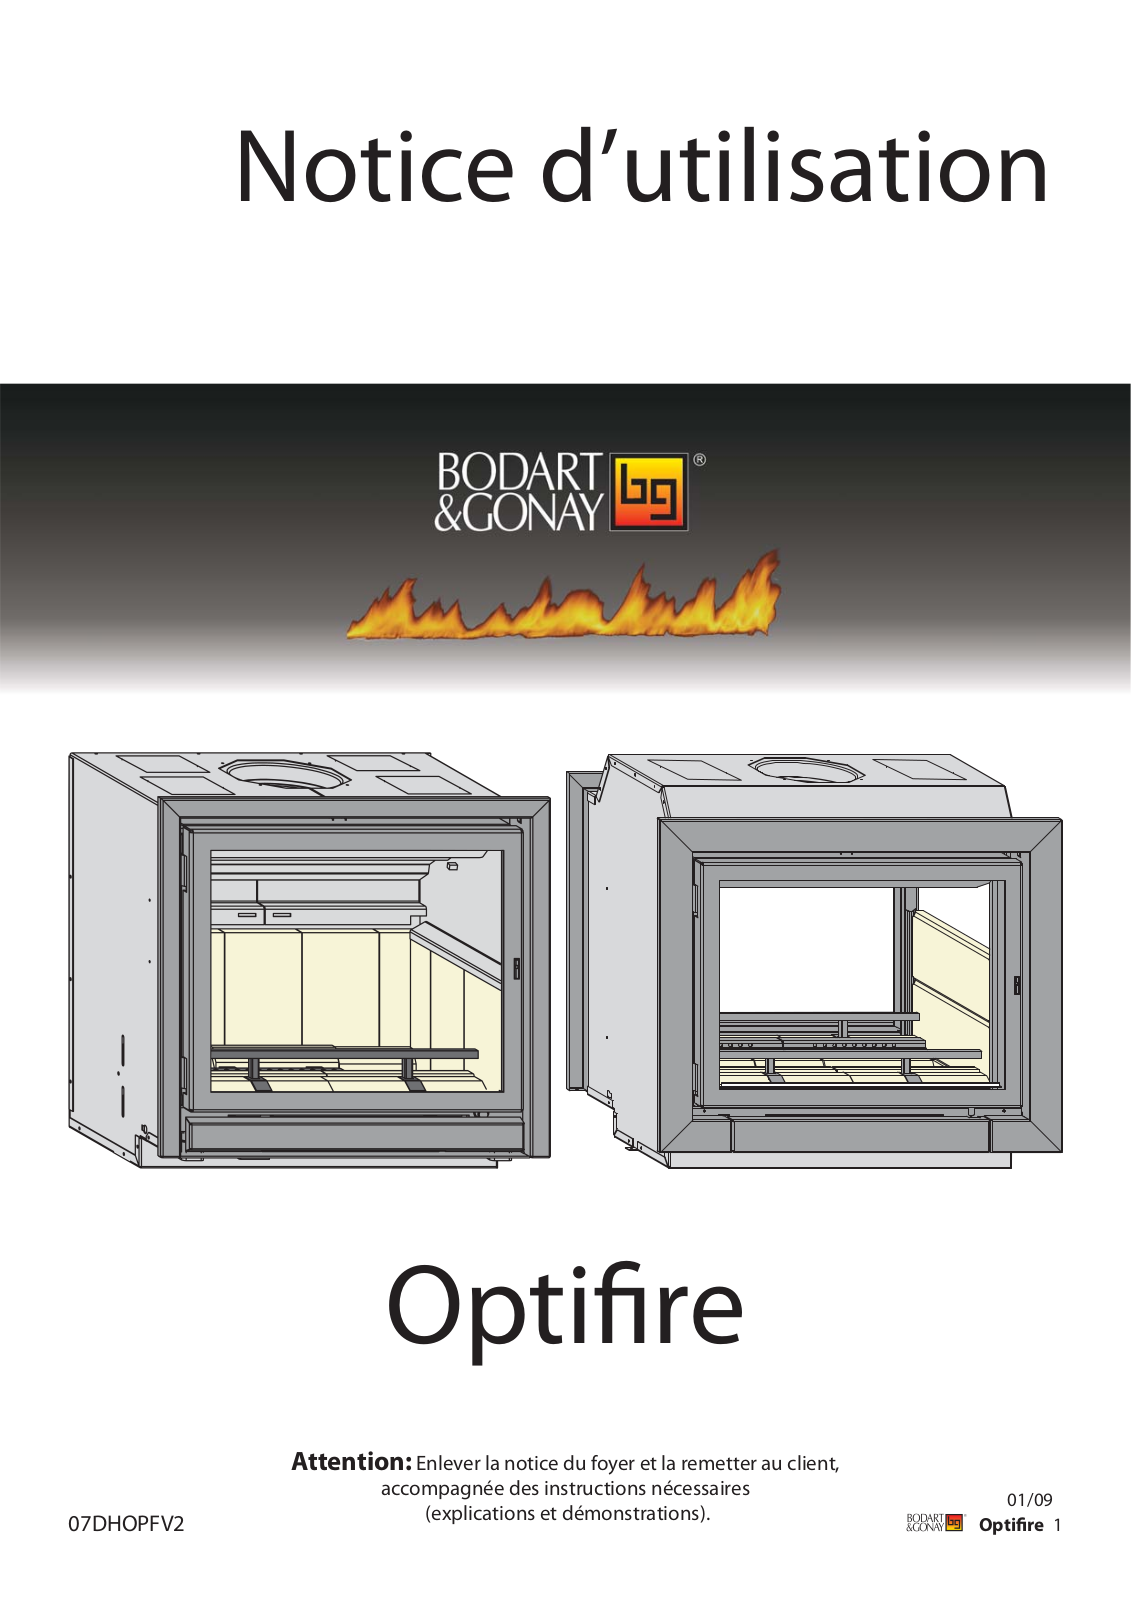 Bodart & gonay OPTIFIRE User Manual